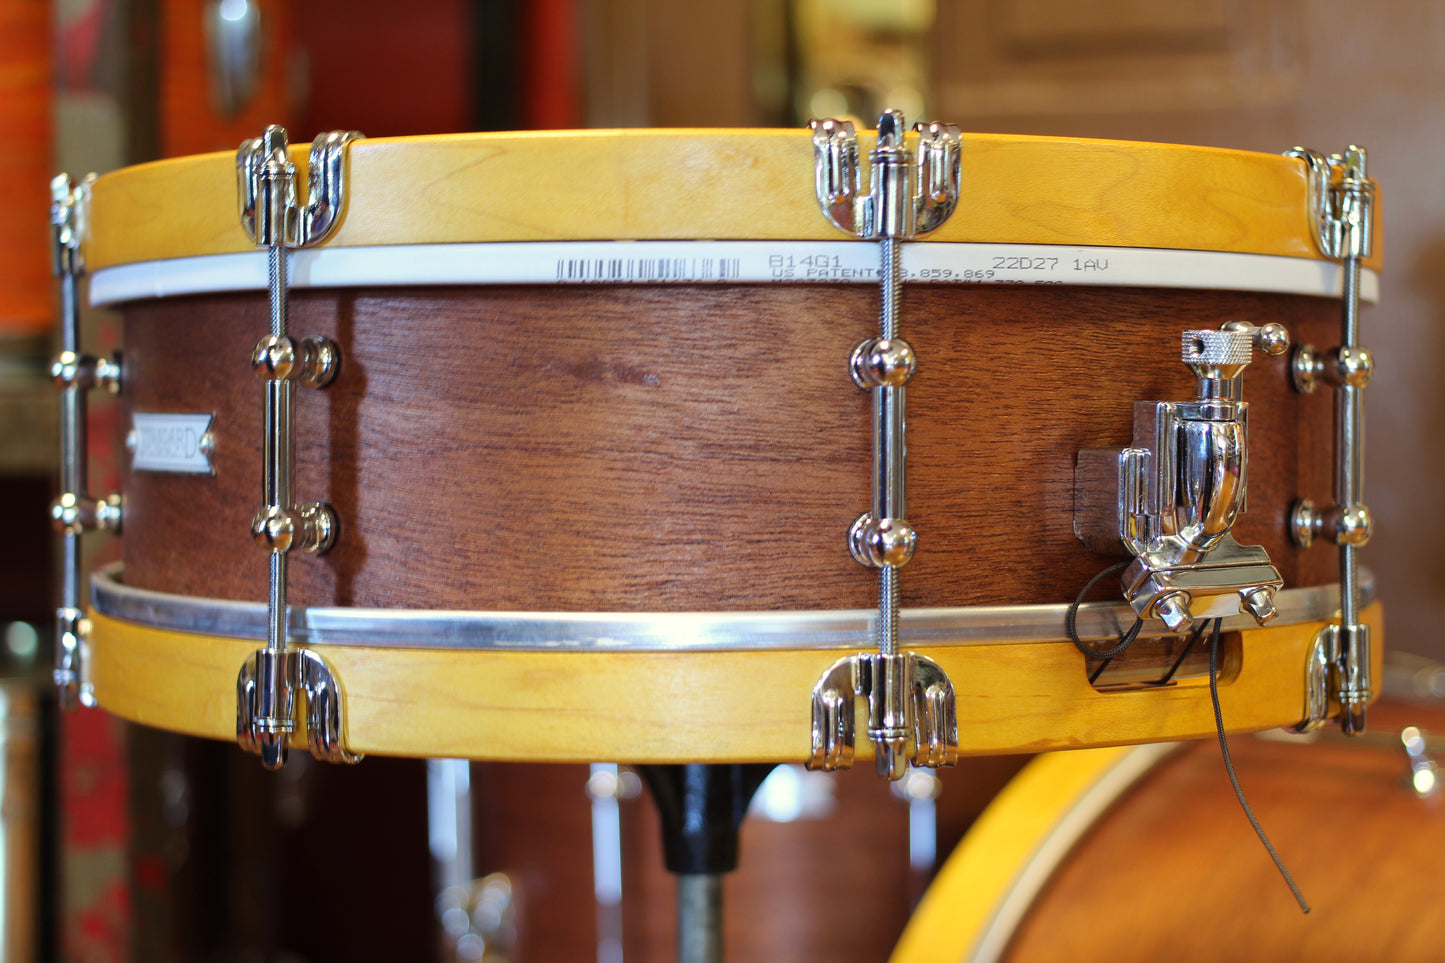 Standard Drum Company 4.5"x14" Vintage Mahogany Snare Drum